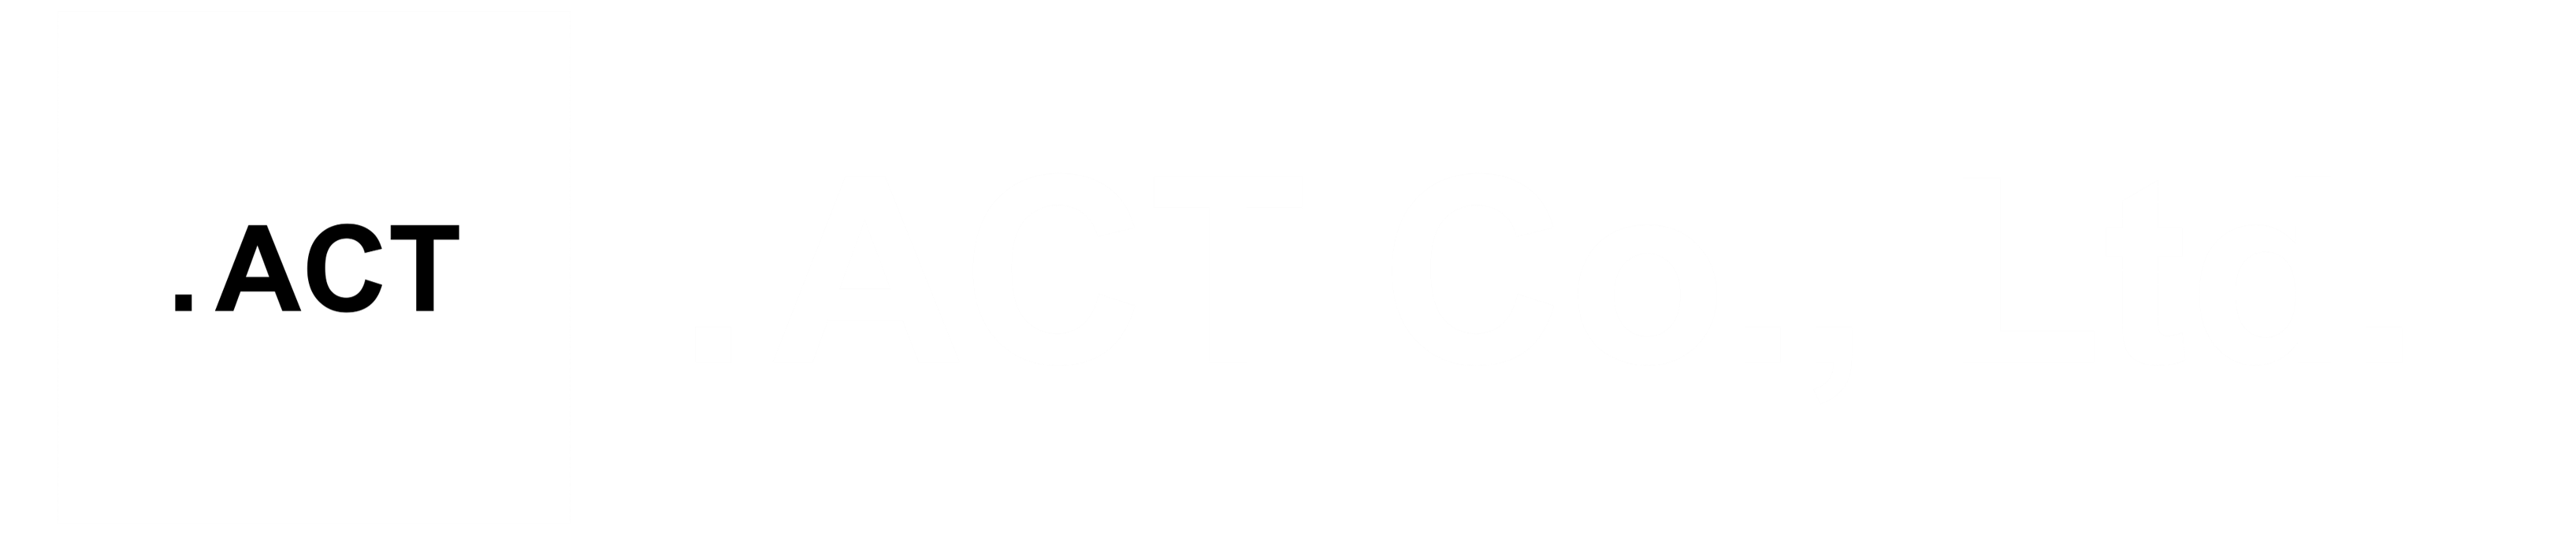 .ACT Co., Ltd.